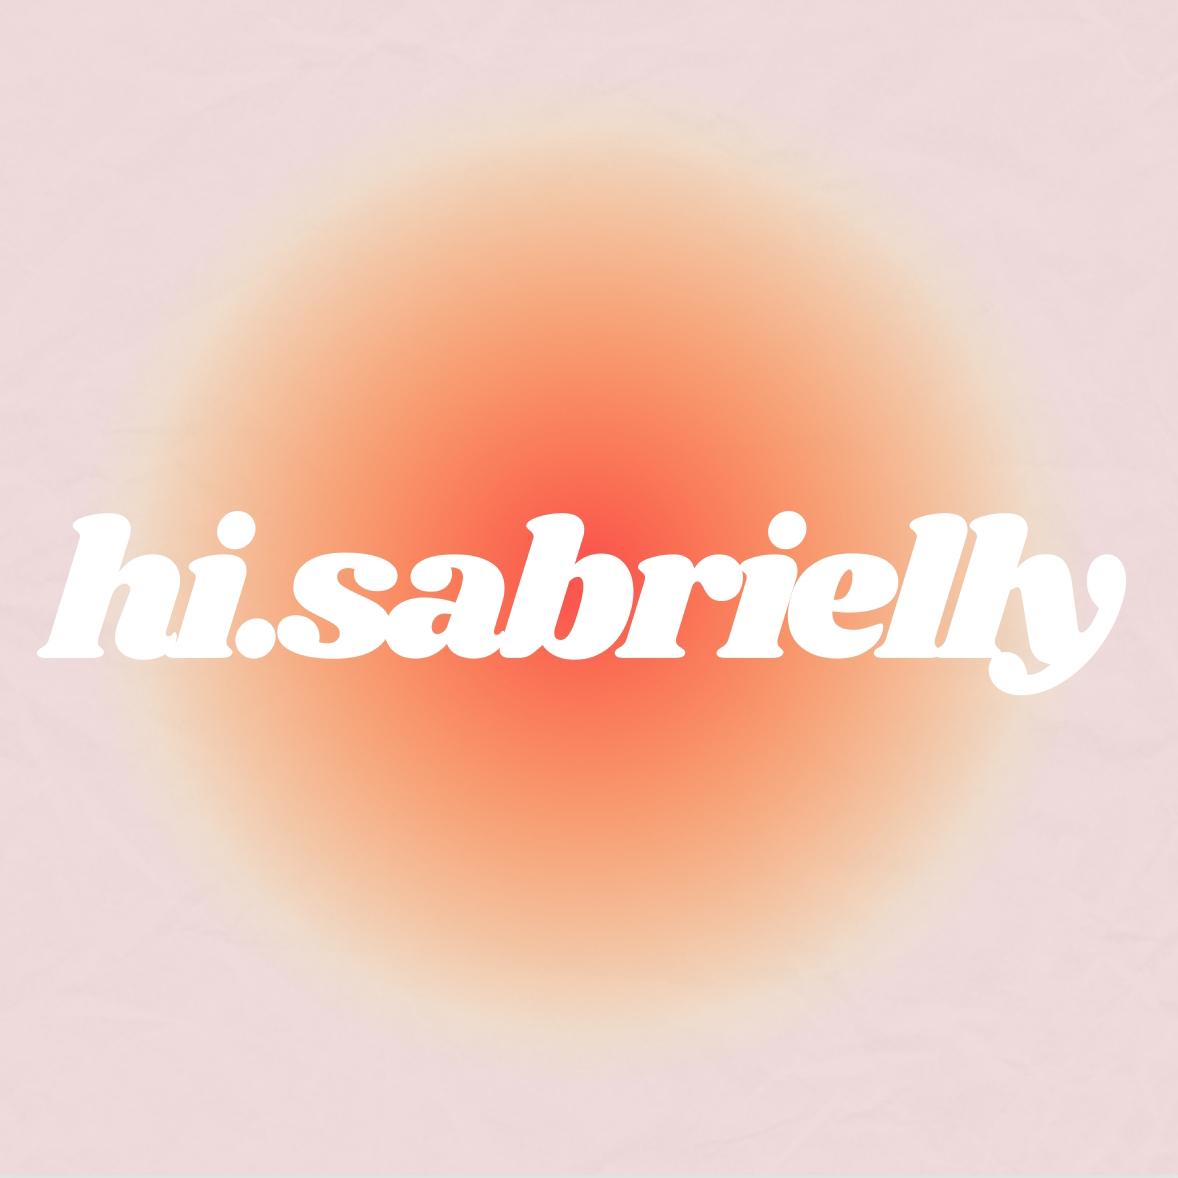 hi.sabrielly's images